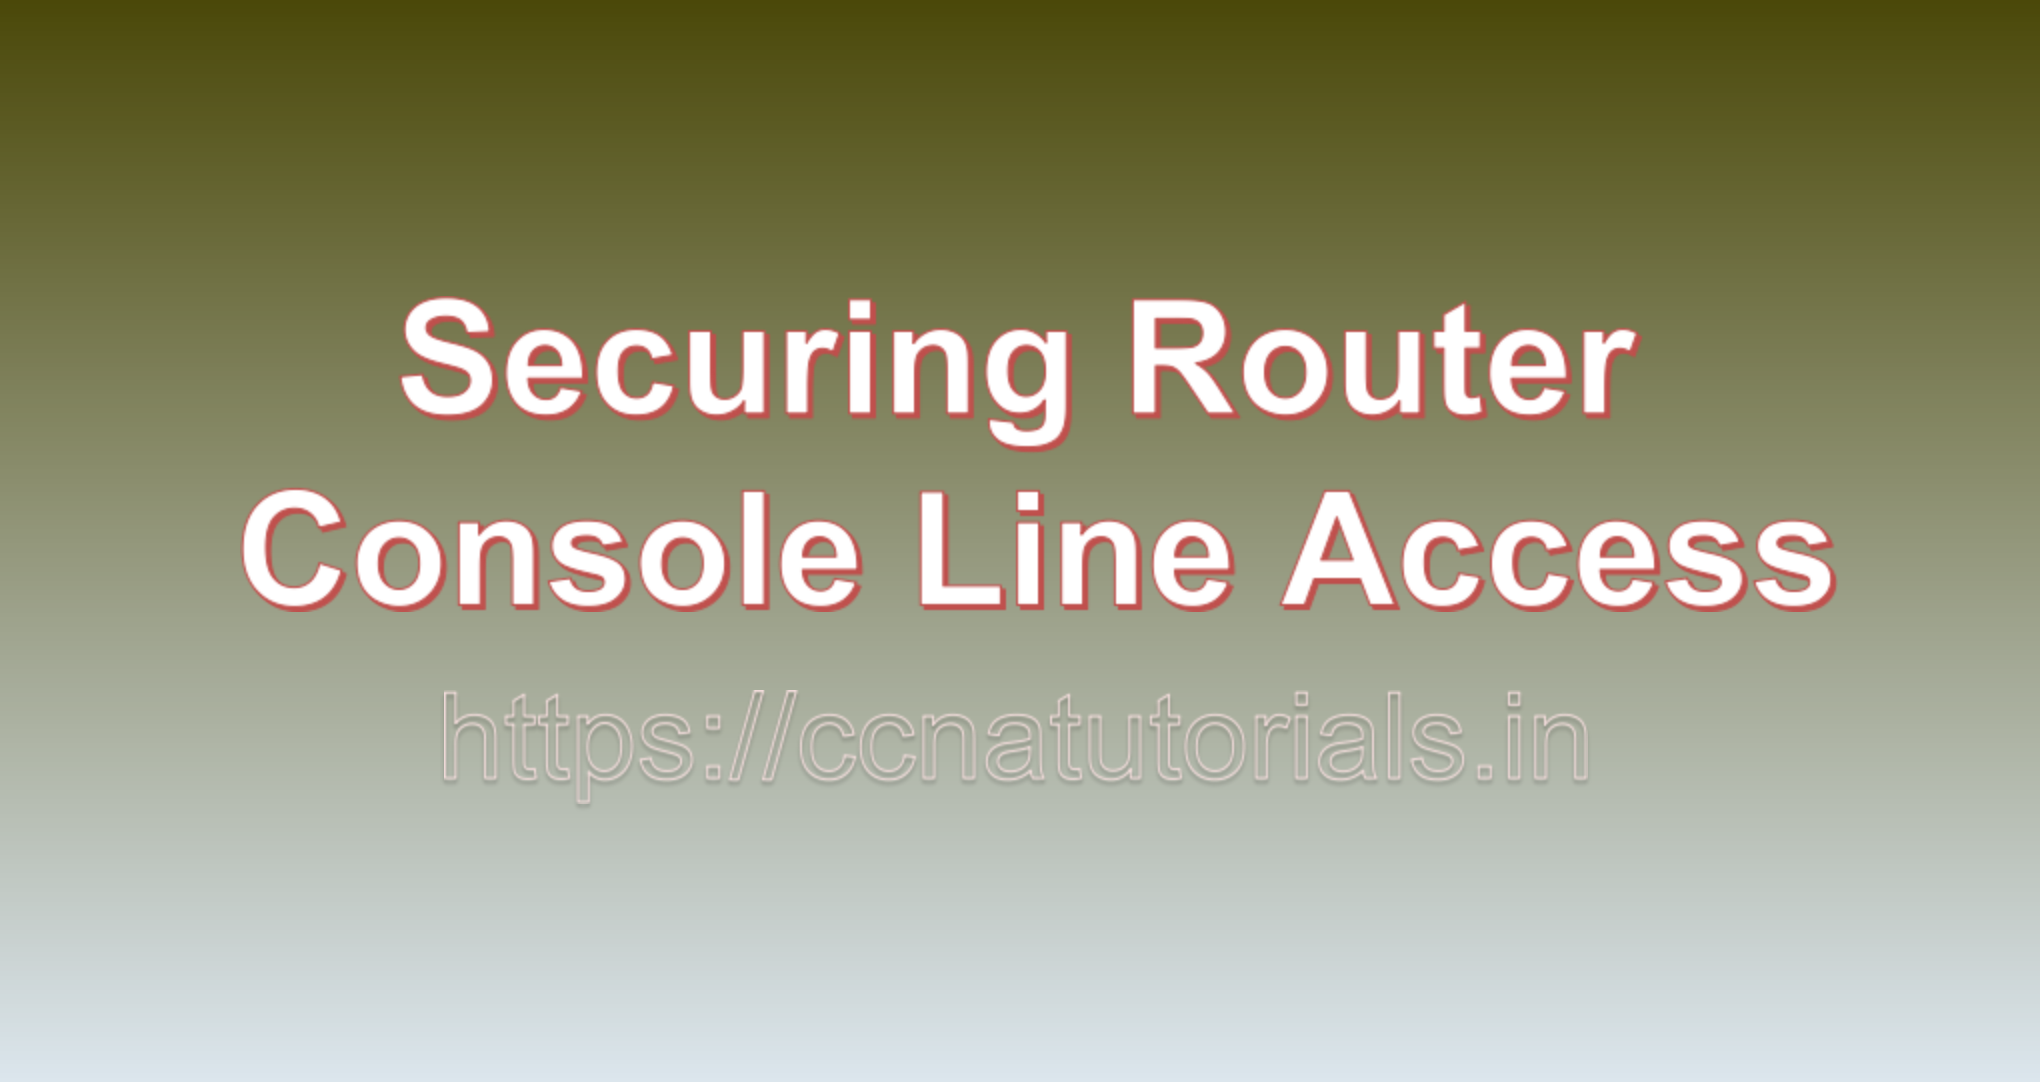 Securing Router Console Line Access, ccna, ccna tutorials